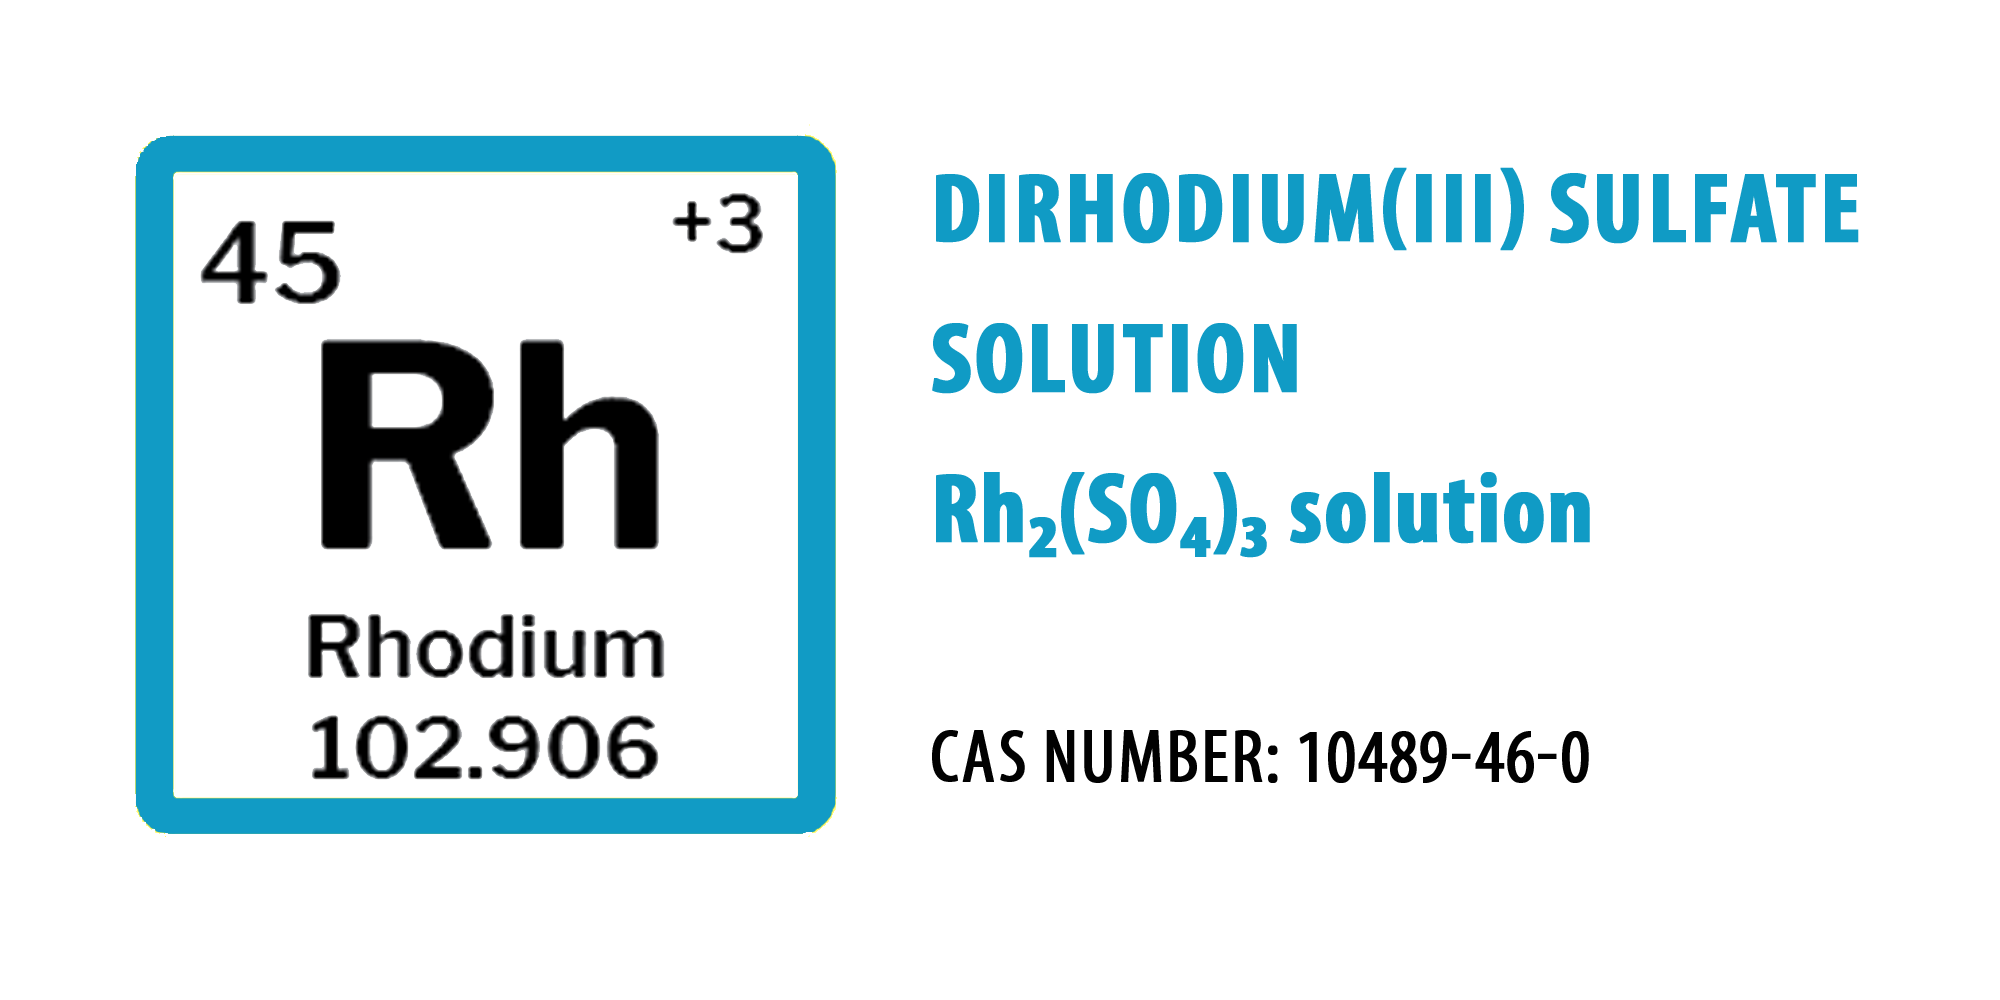 Dirhodium(III)